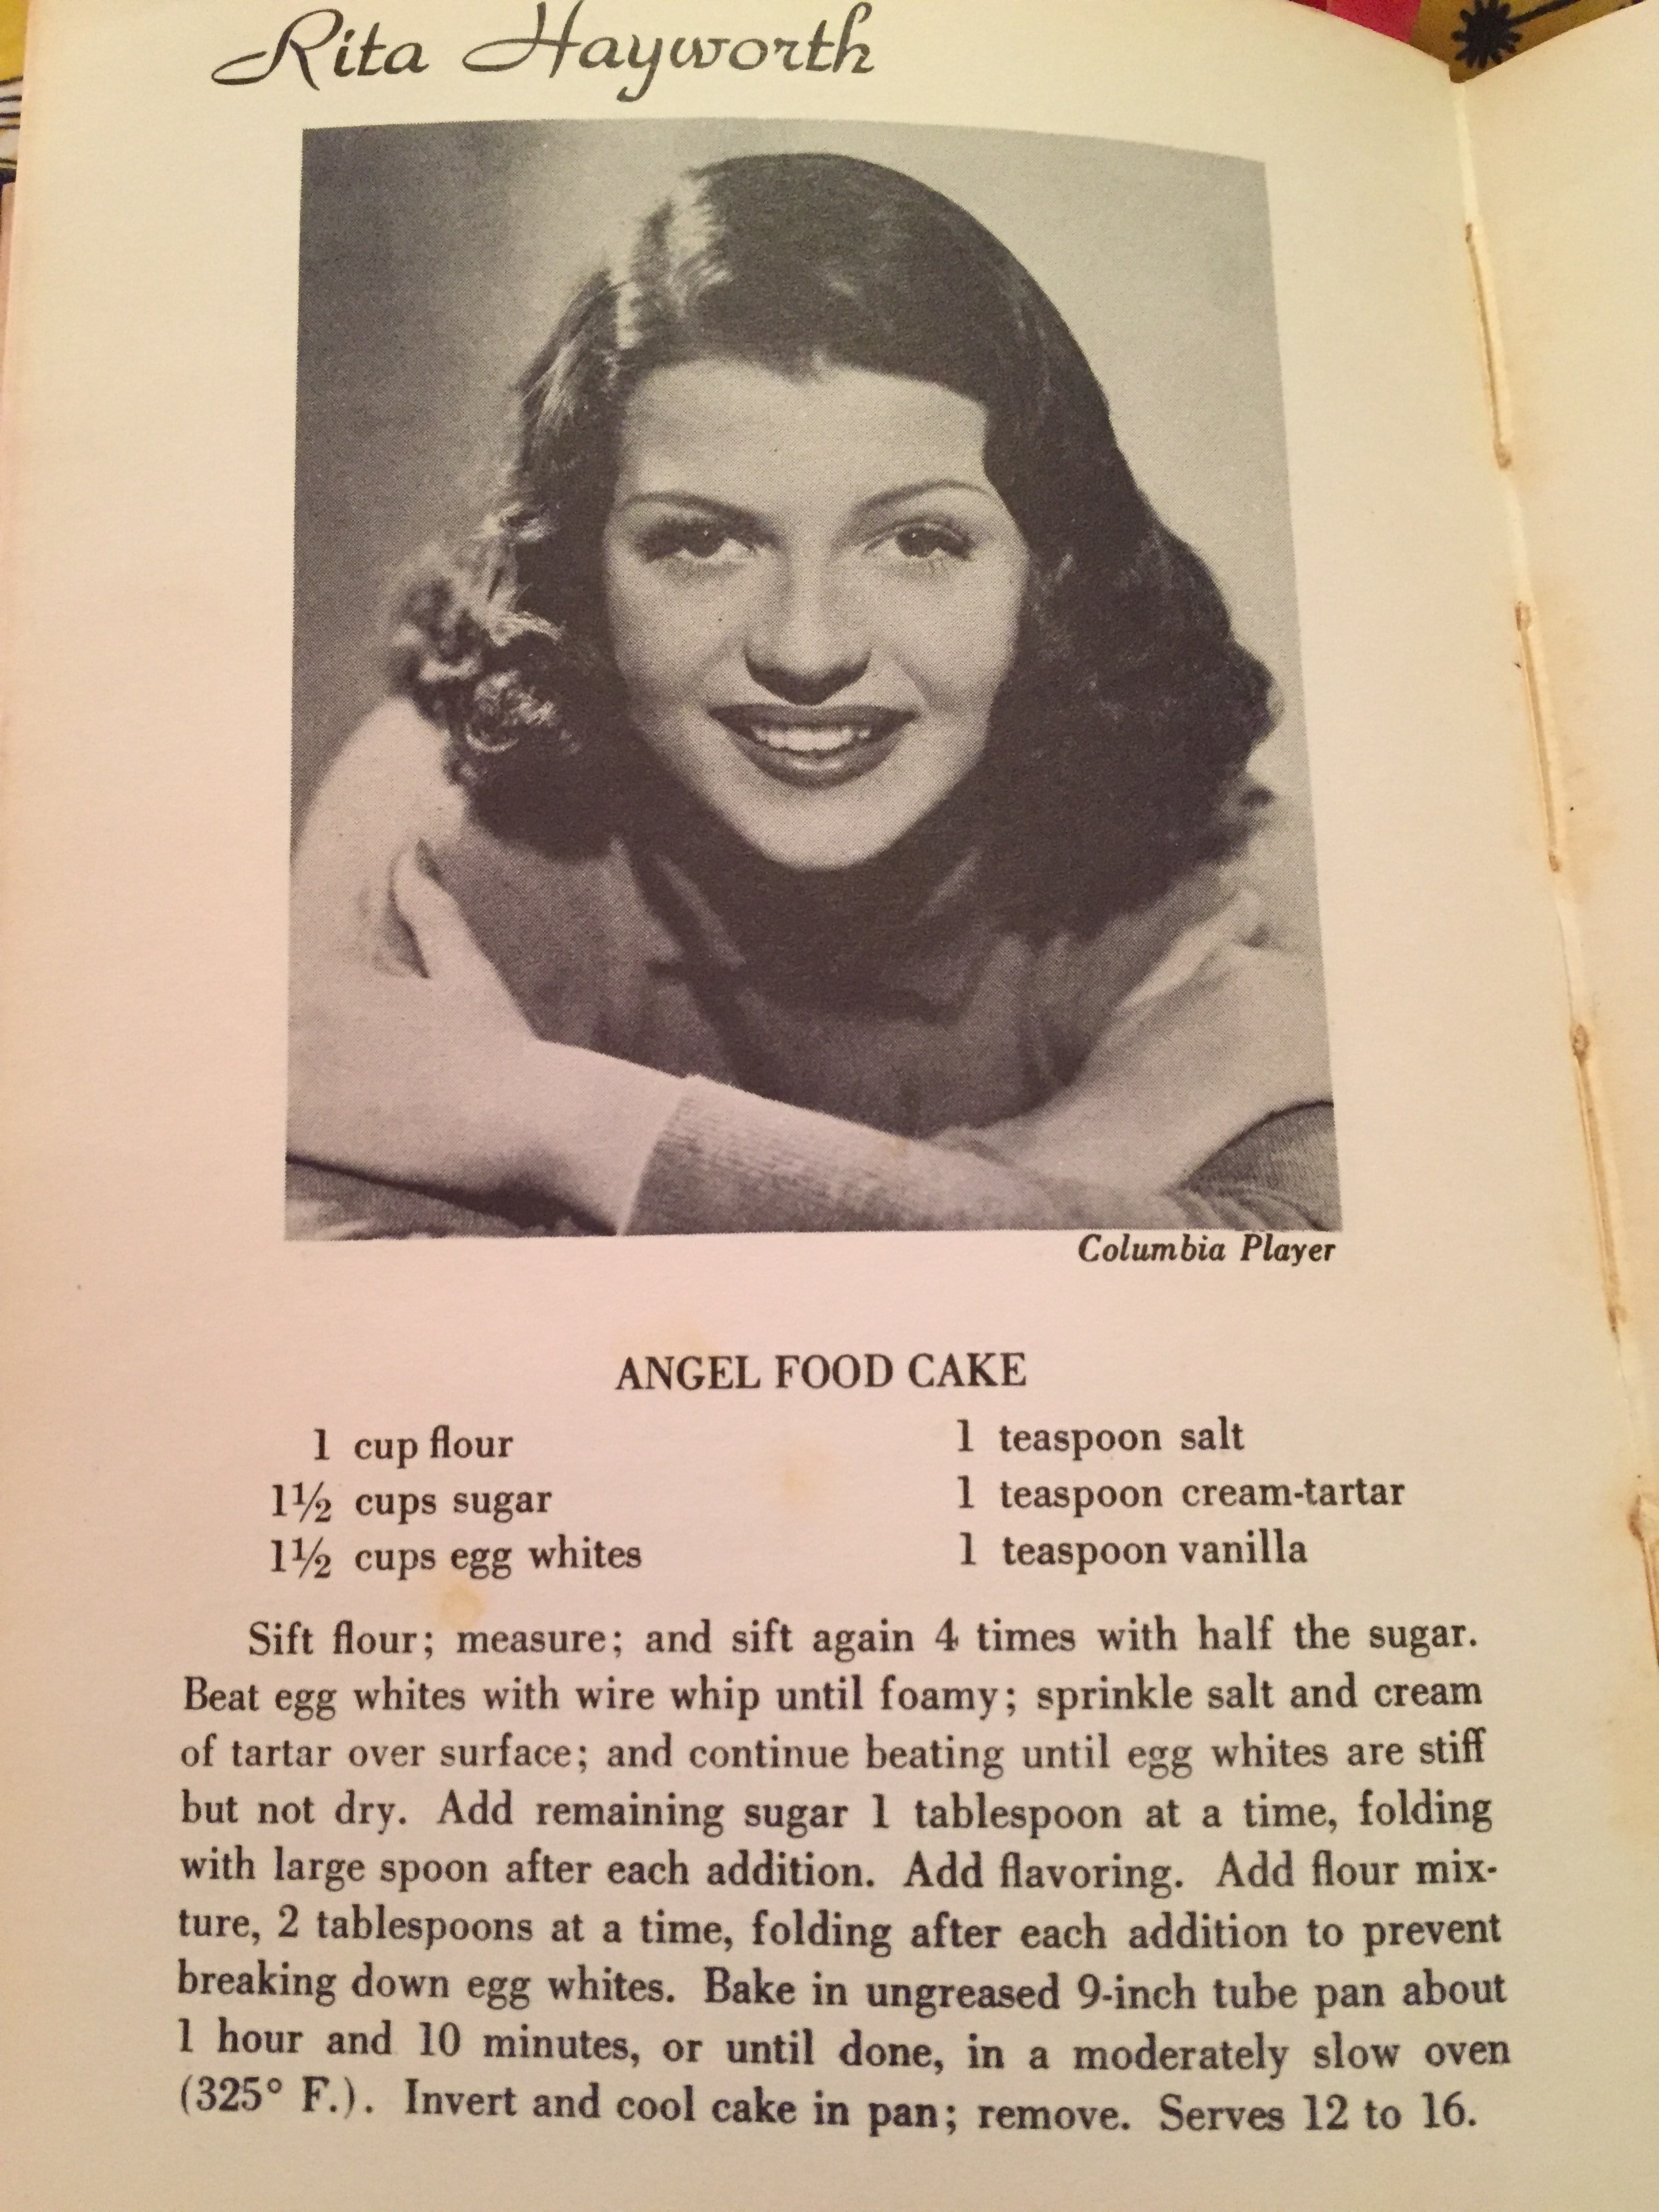 Rita Hayworth’s Angel Food Cake